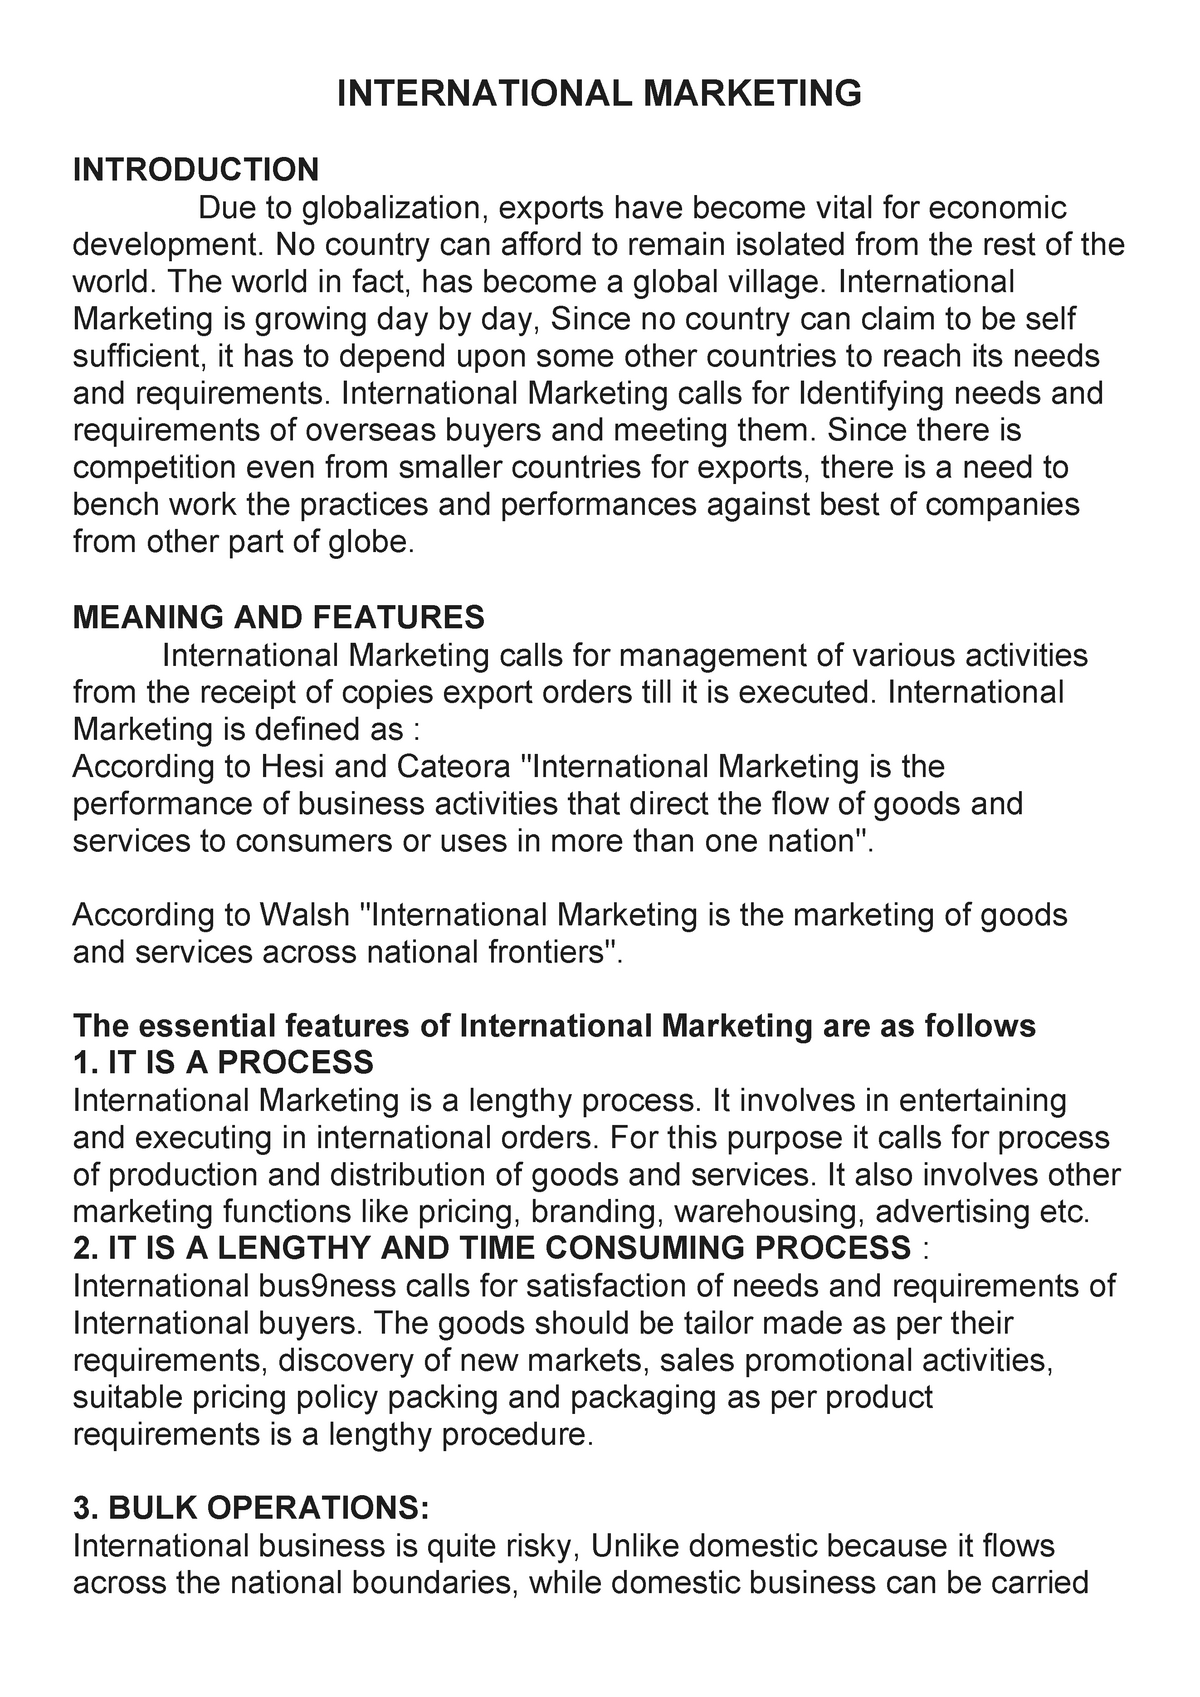 essay questions on international marketing